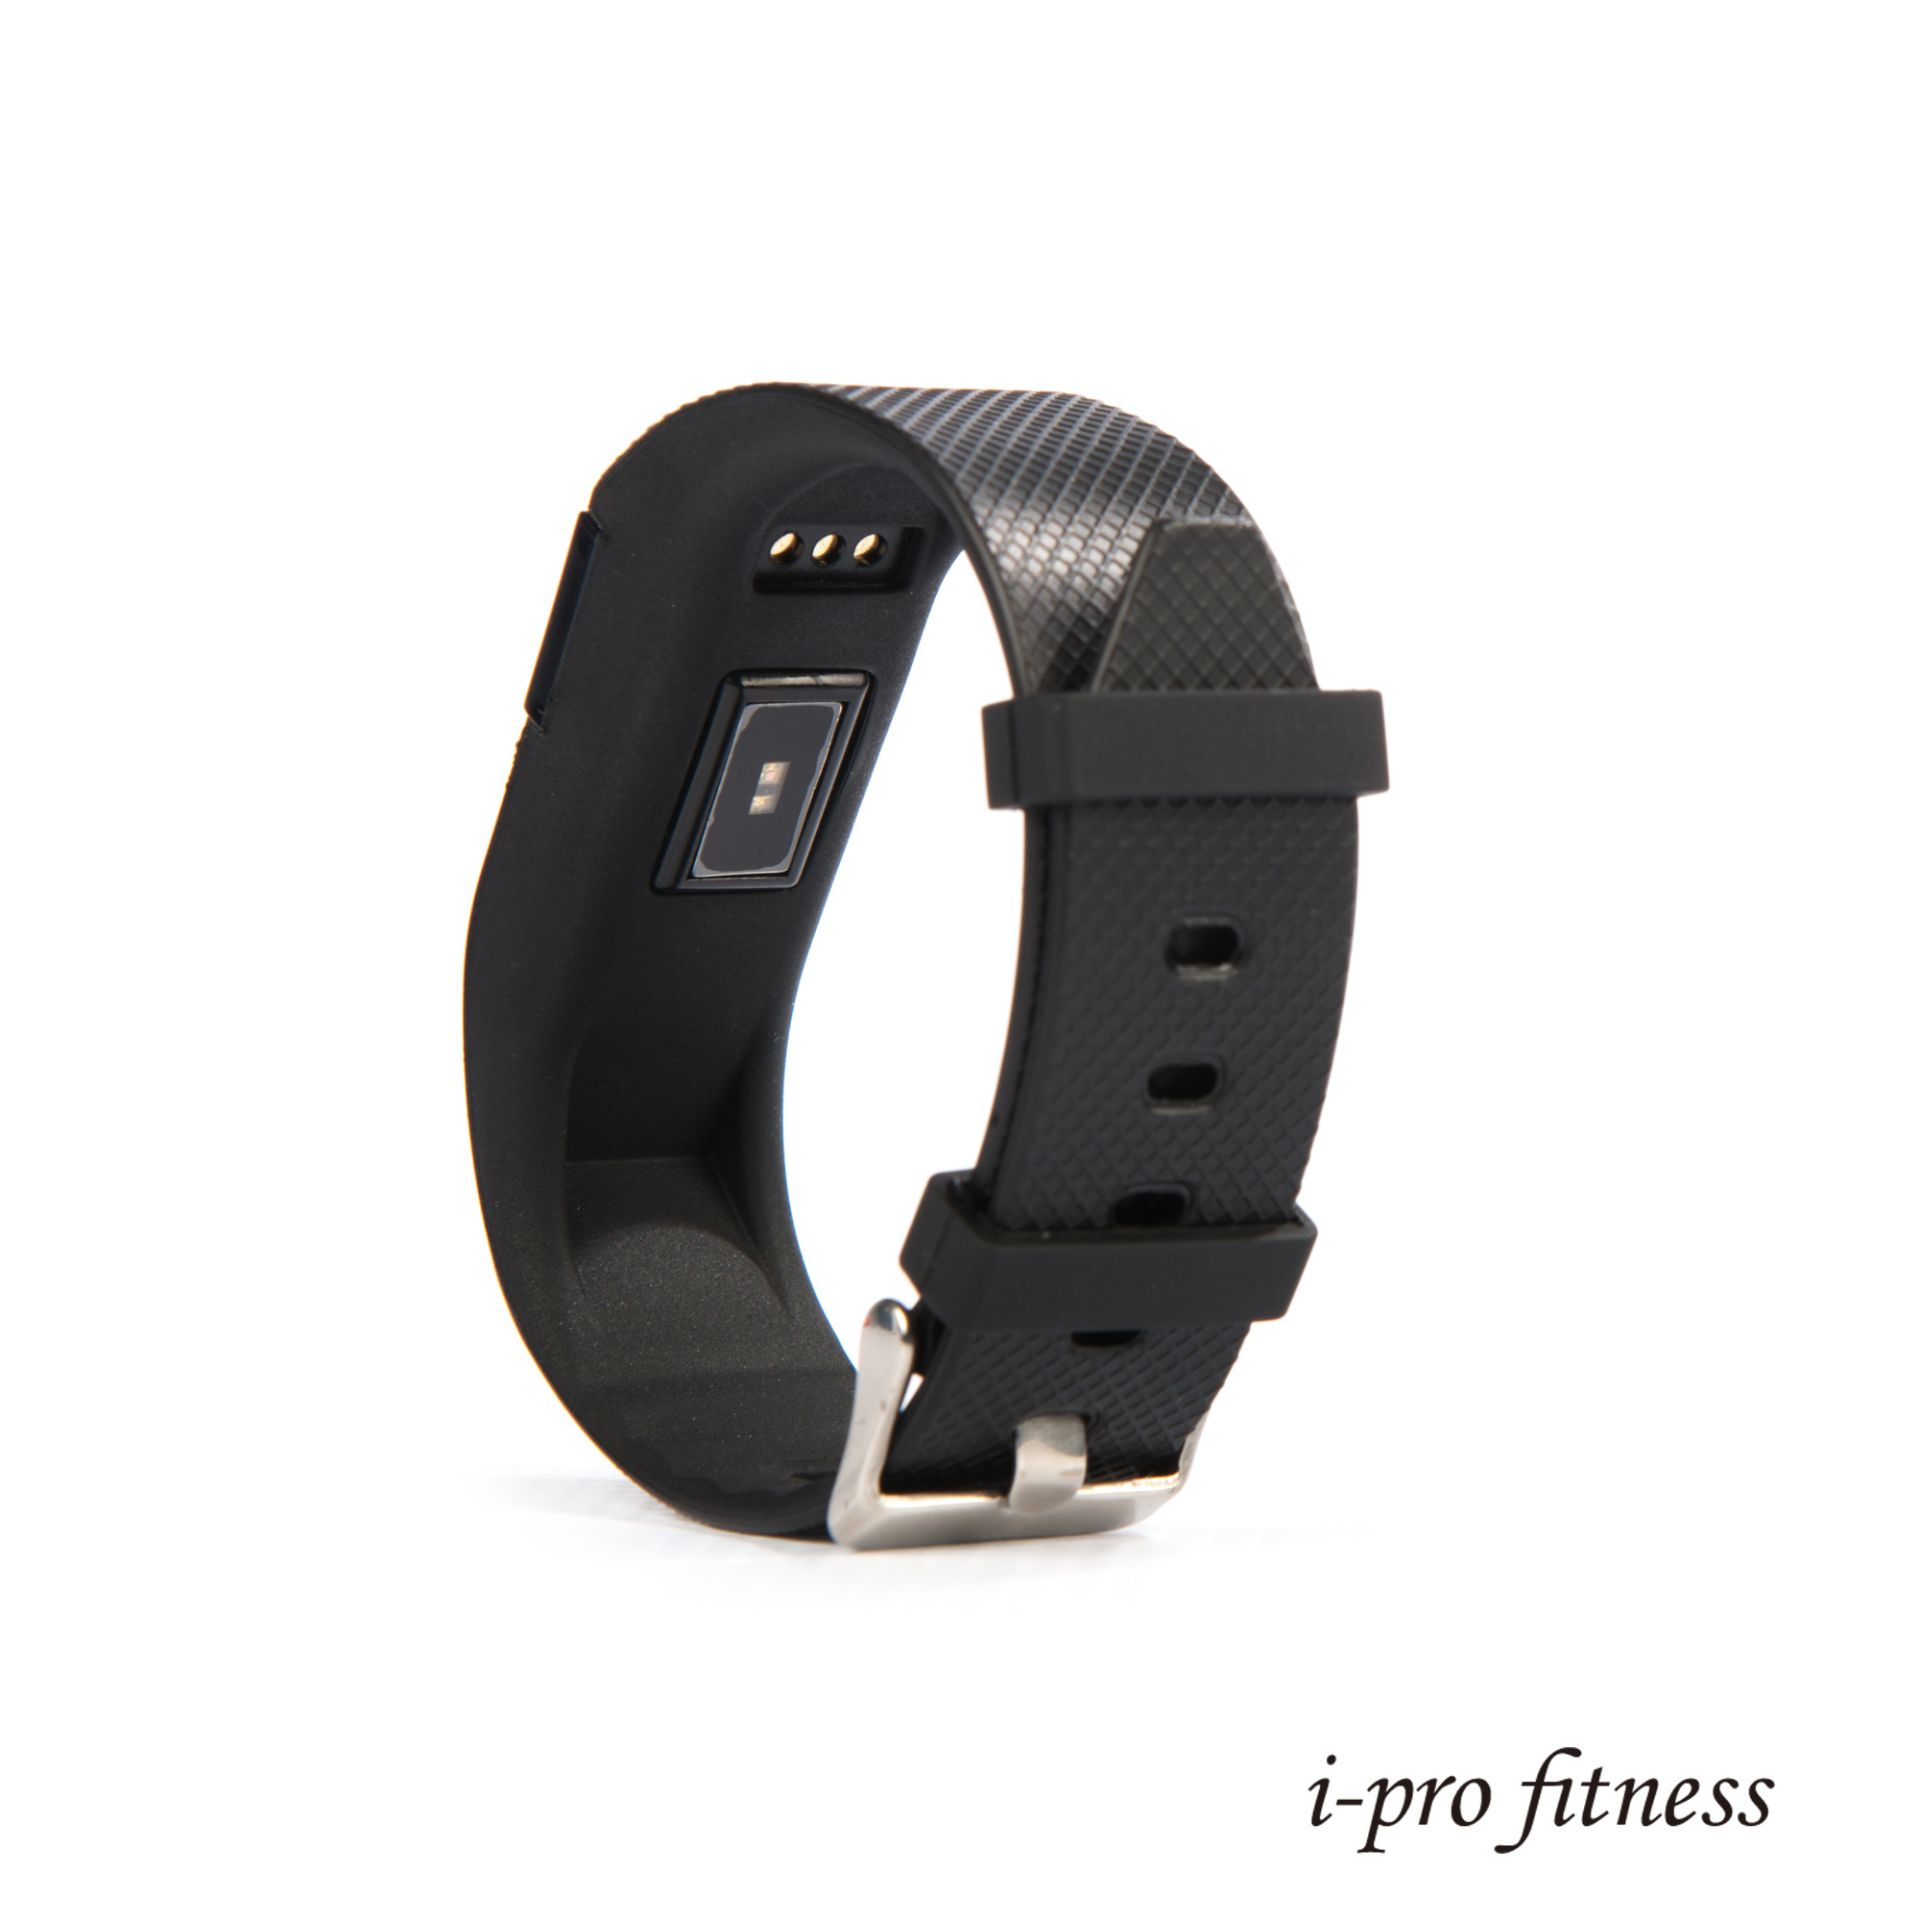 Fitness Tracker i-pro fitness, Bluetooth 4.0 Sports Smart Bracelet, Heart Rate Monitor, Pedometer. - Image 8 of 8